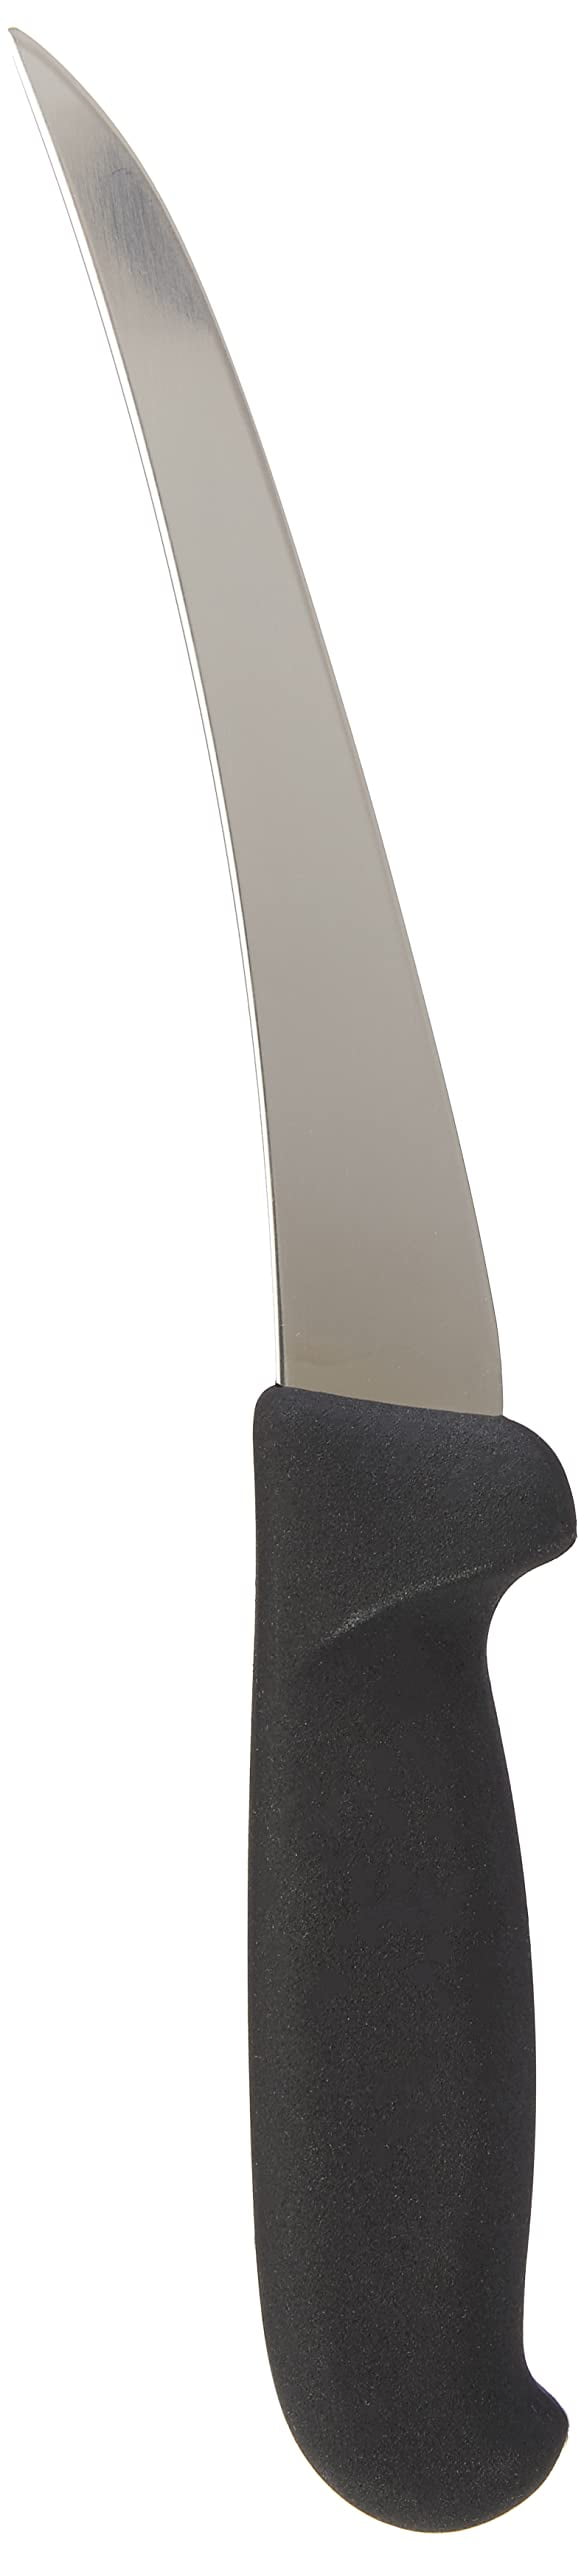 Victorinox 6 Blade Curved Semi-Stiff Boning Knife - Blue